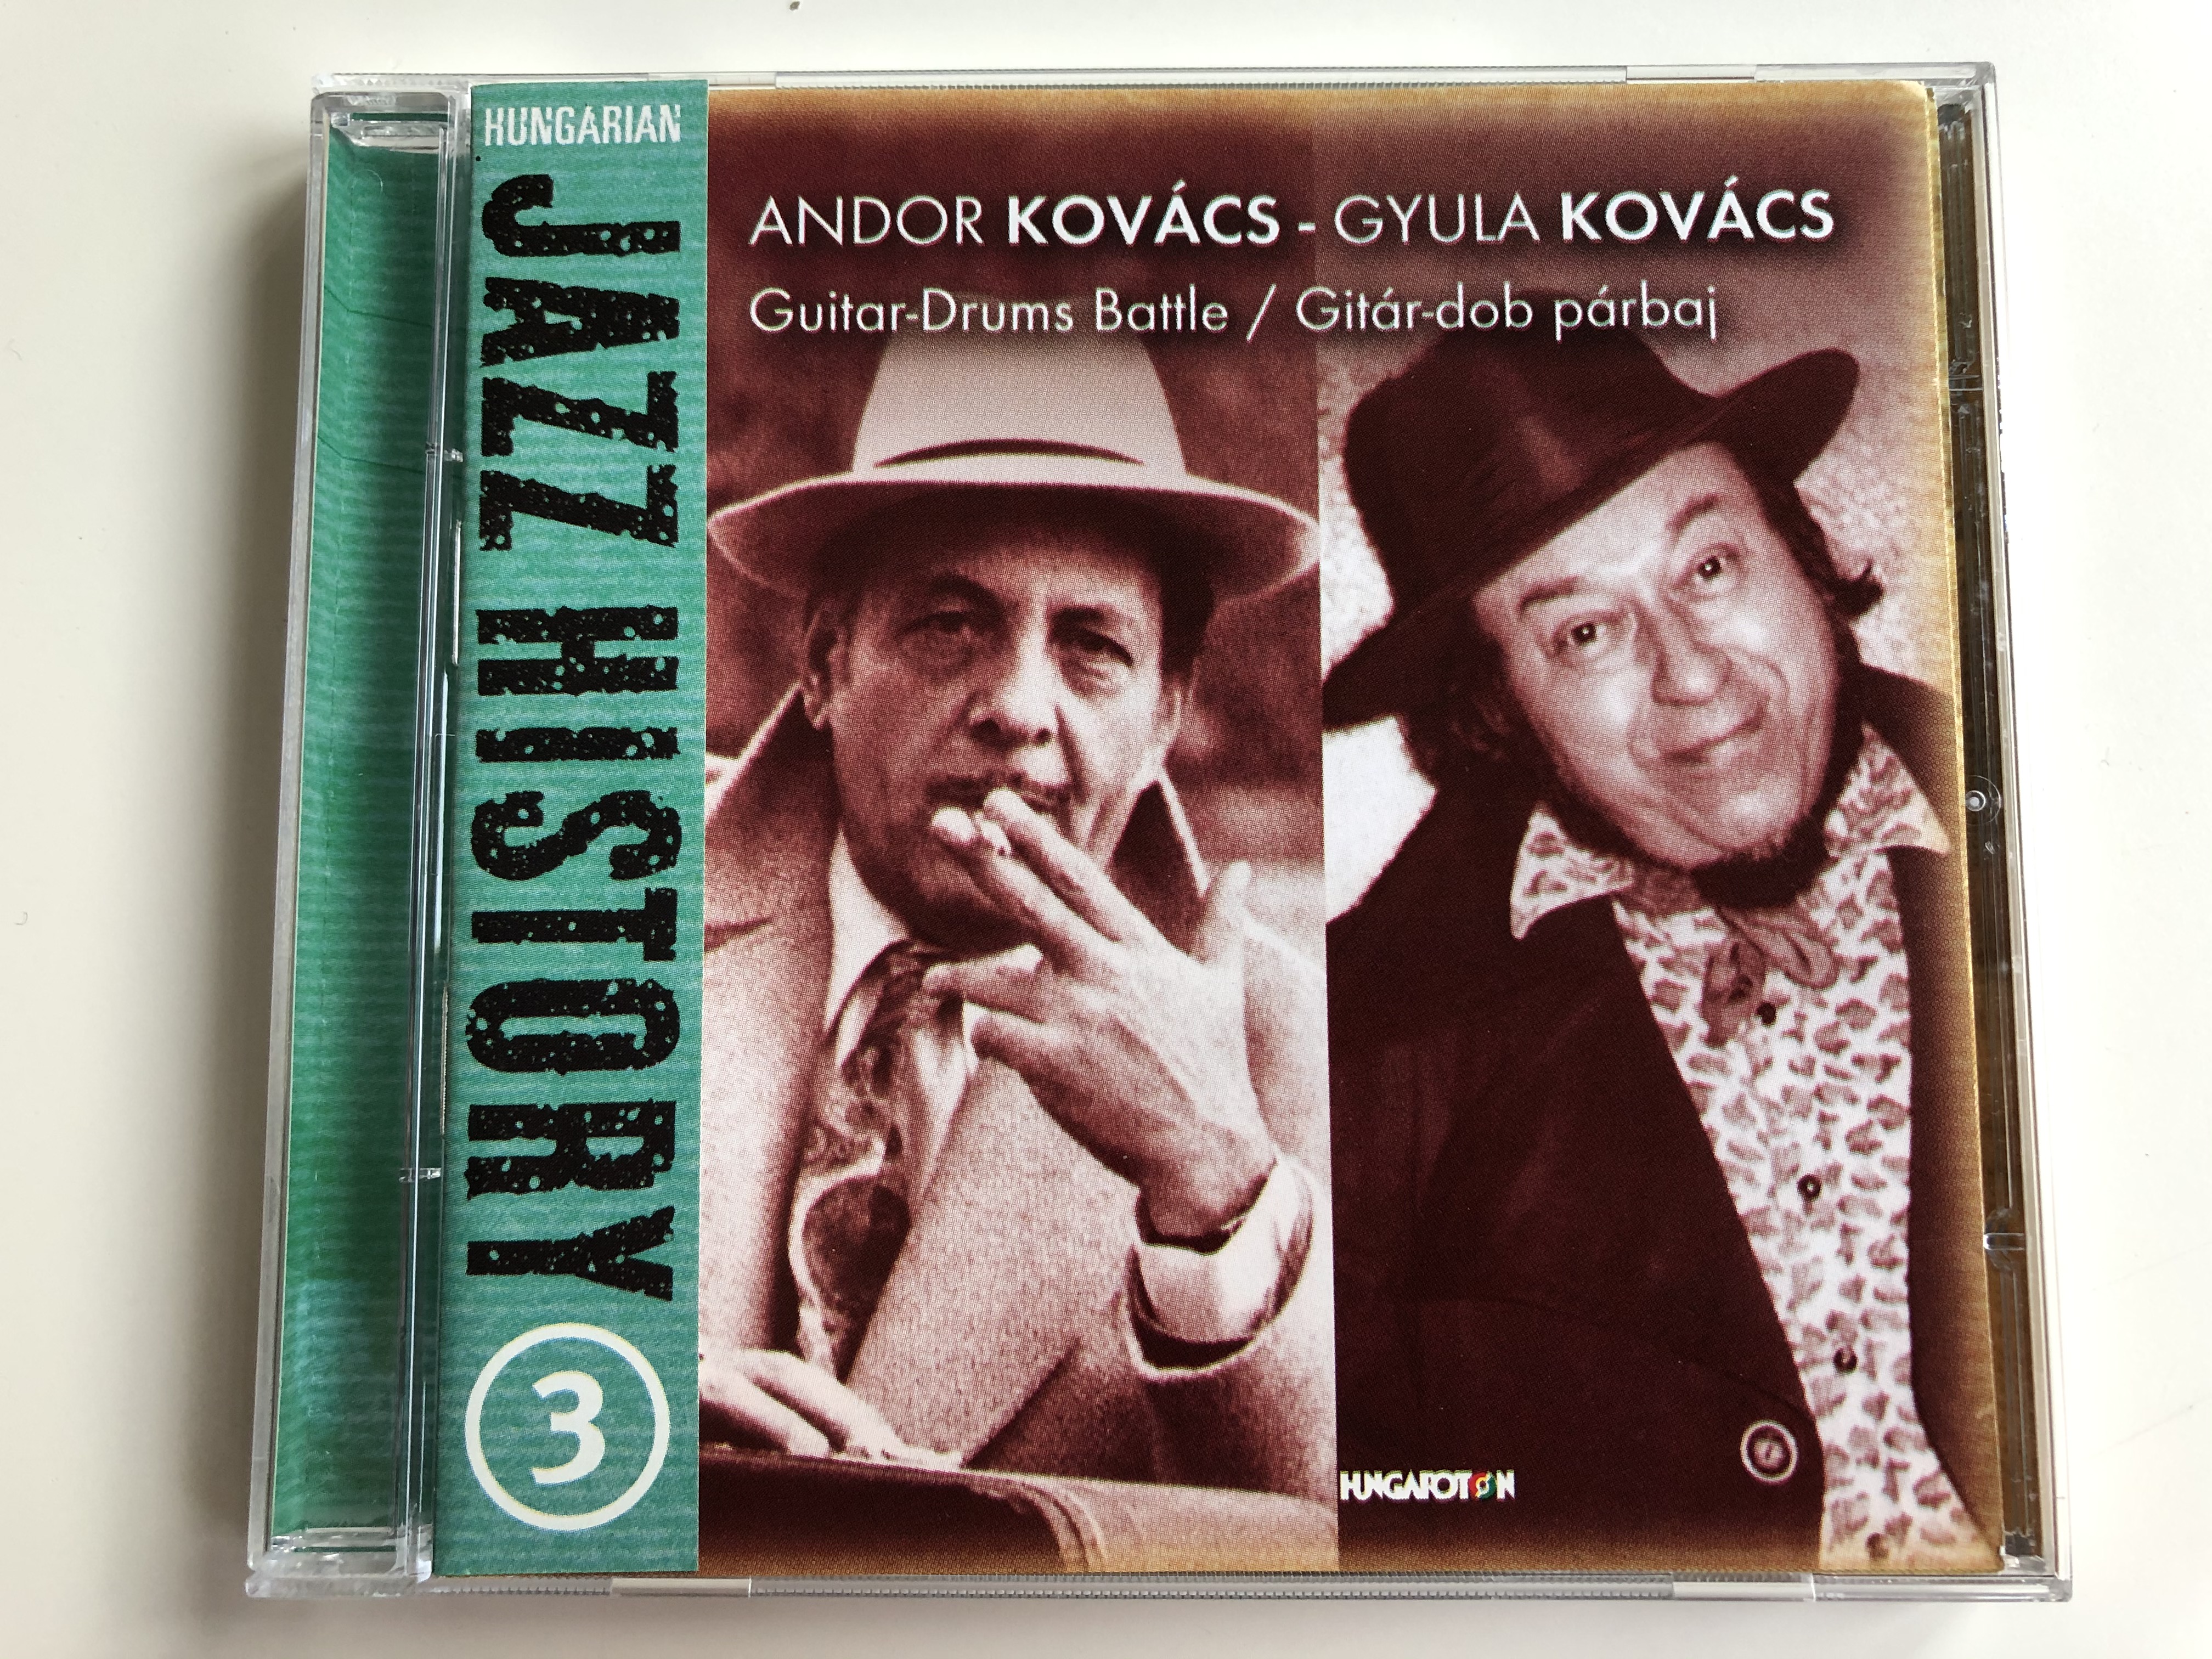 hungarian-jazz-history-3-andor-kovacs-gyula-kovacs-guitar-drums-battle-gitar-dob-parbaj-hungaroton-audio-cd-2000-hcd-71010-1-.jpg